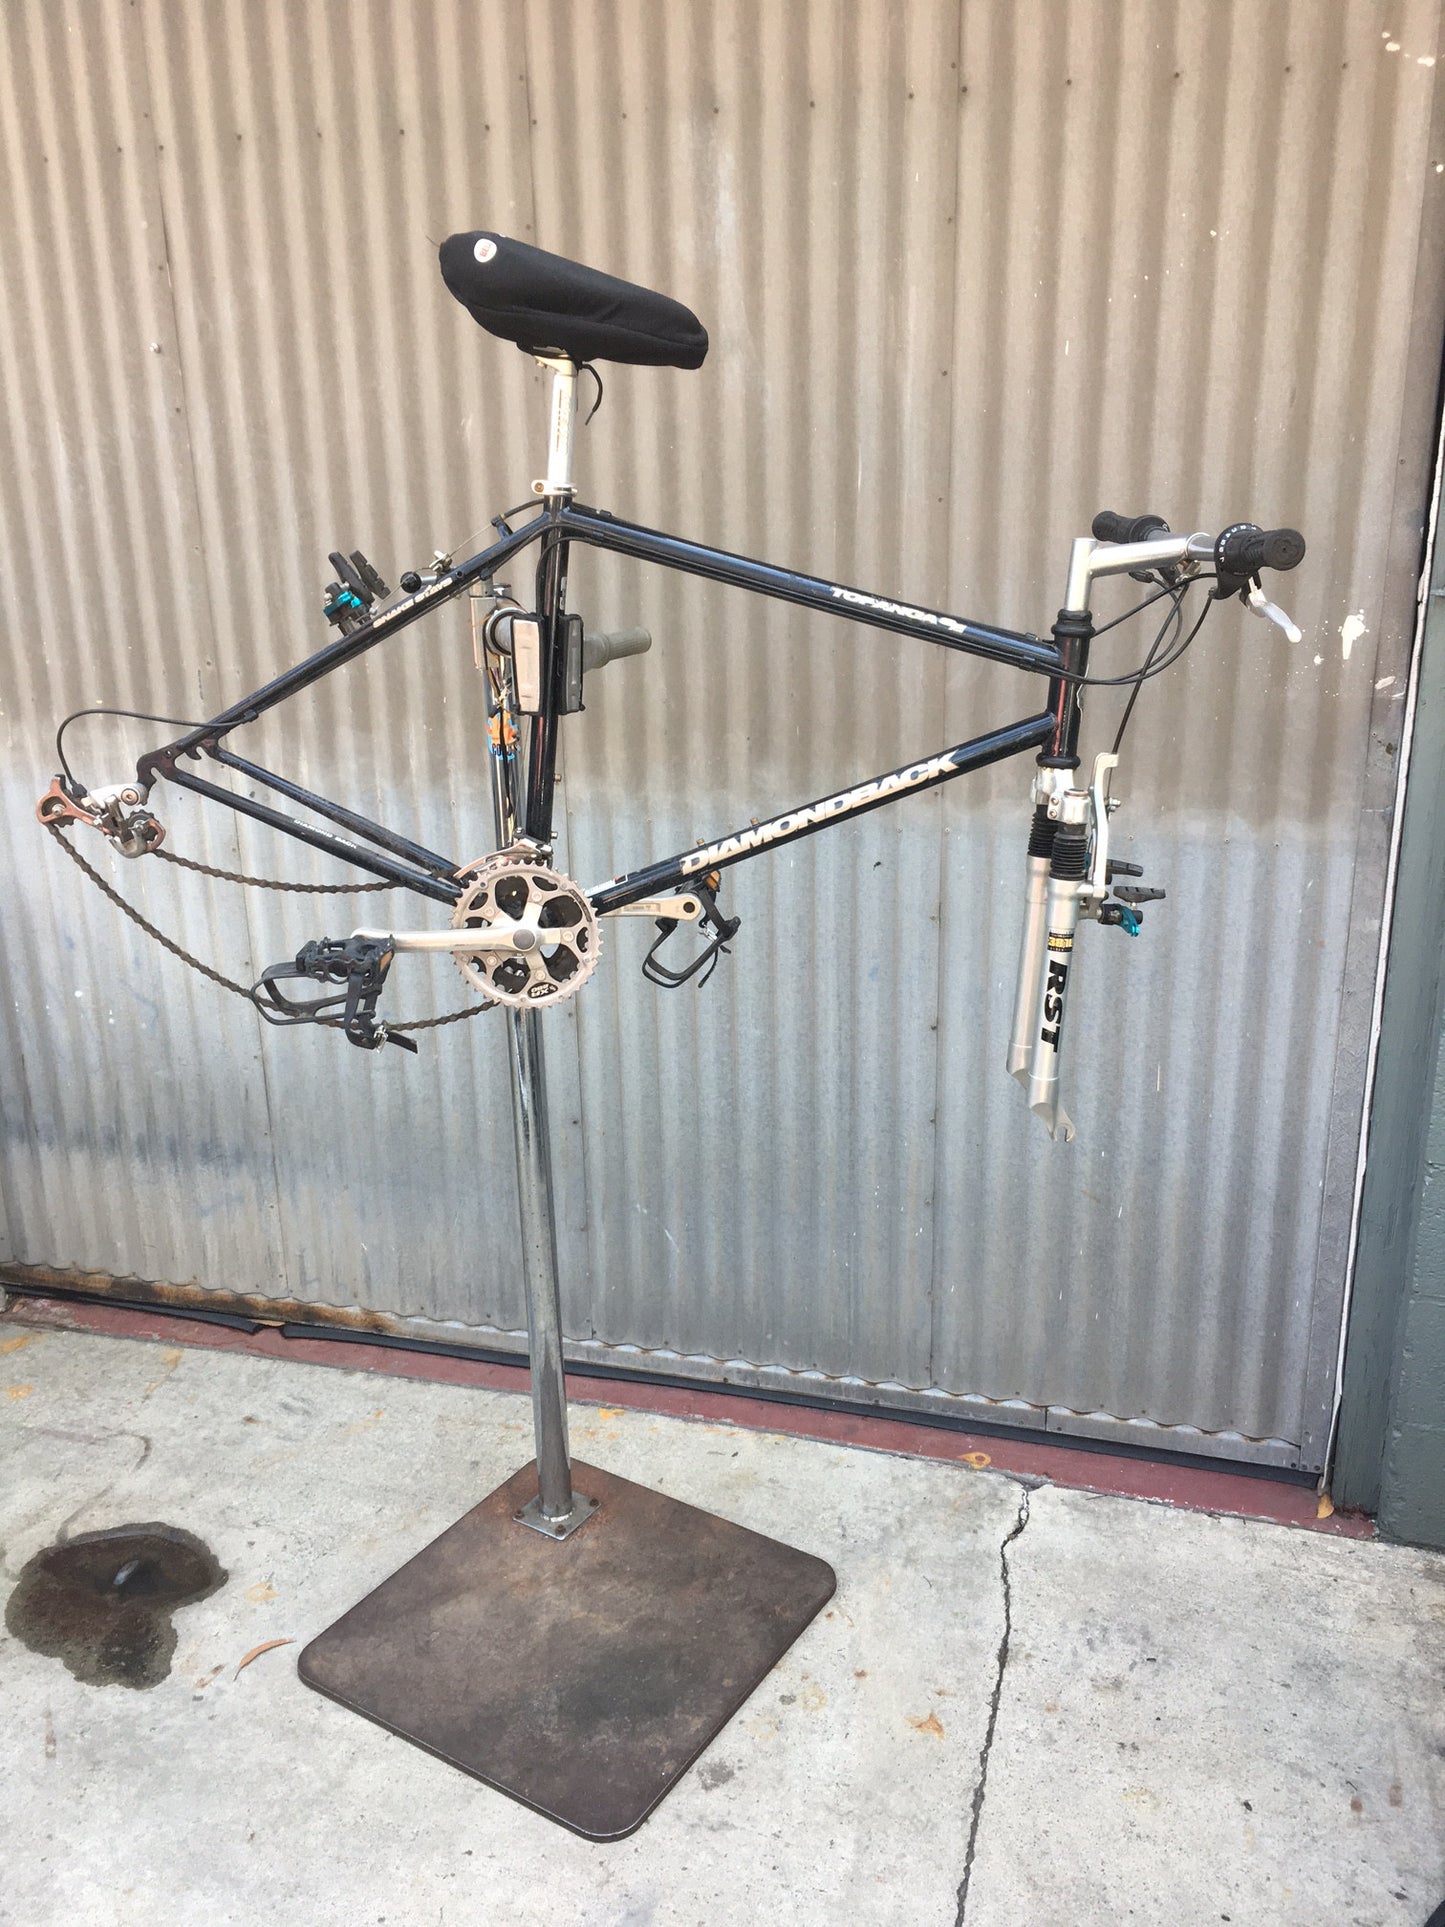 Shop Equipment - Professional Bicycle Workstand for Prop Rental - Studio Rental